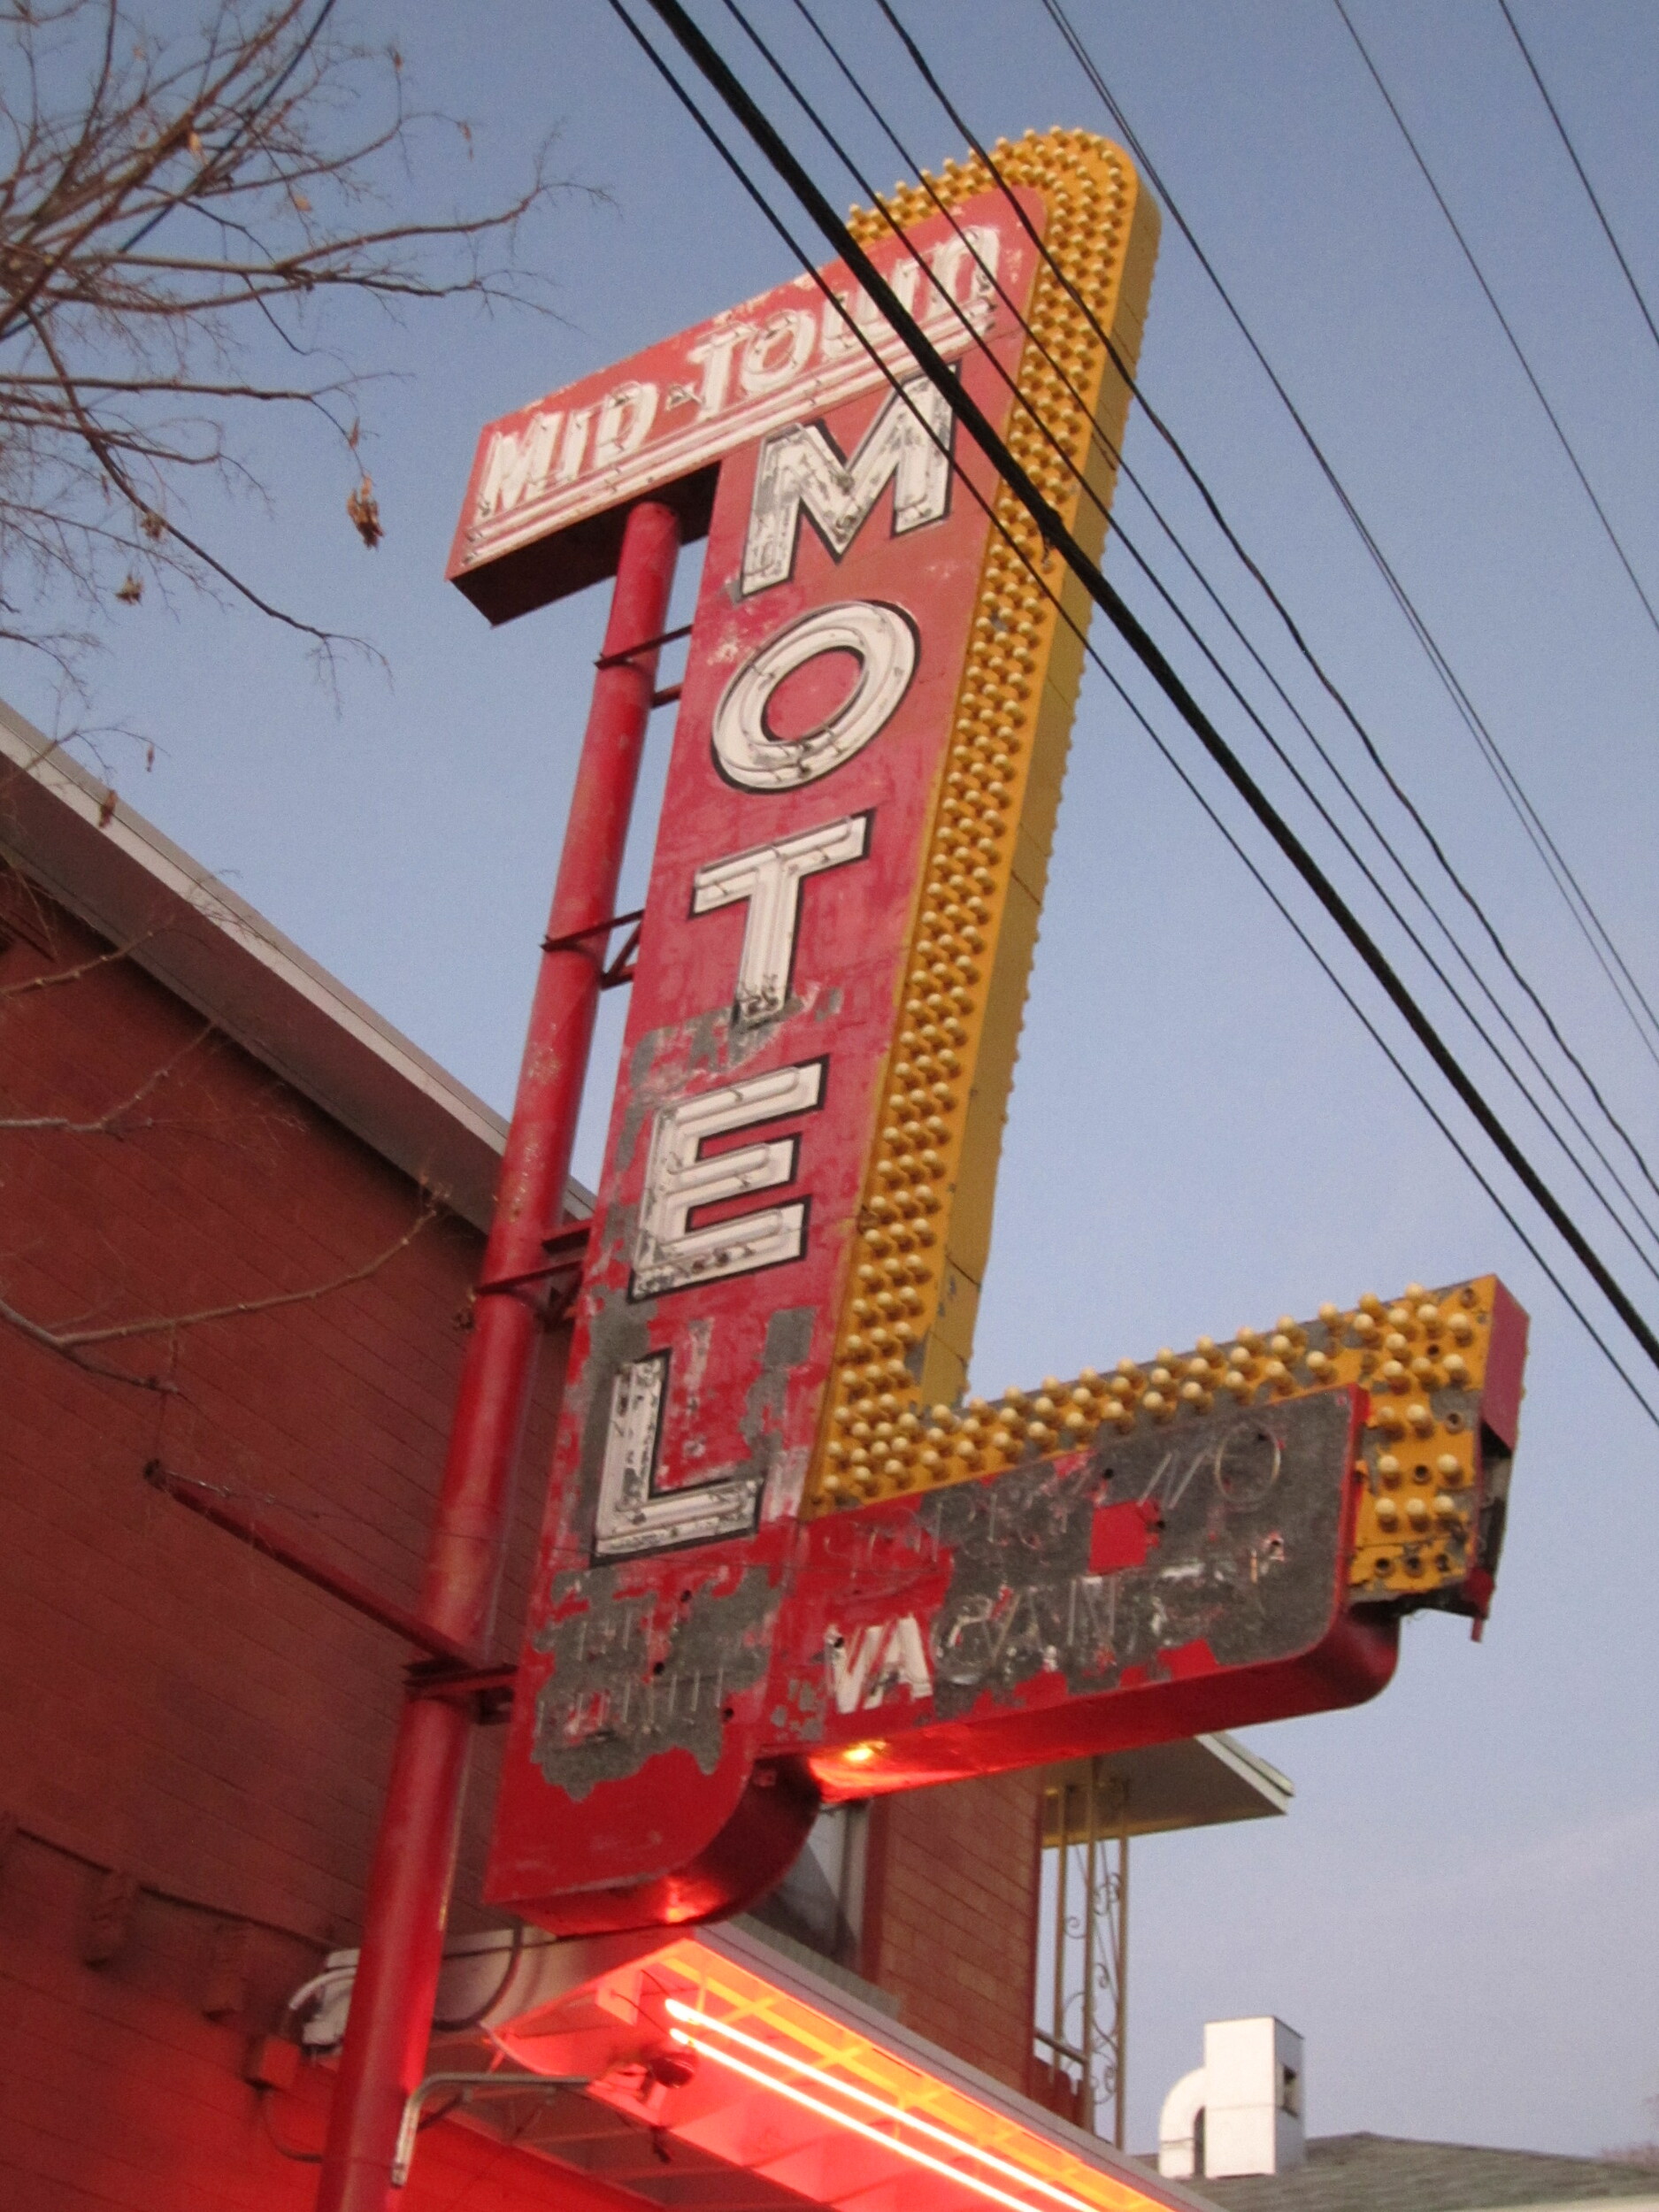 Midtown Motel flag mounted pylon sign, Reno, Nevada: photographic print